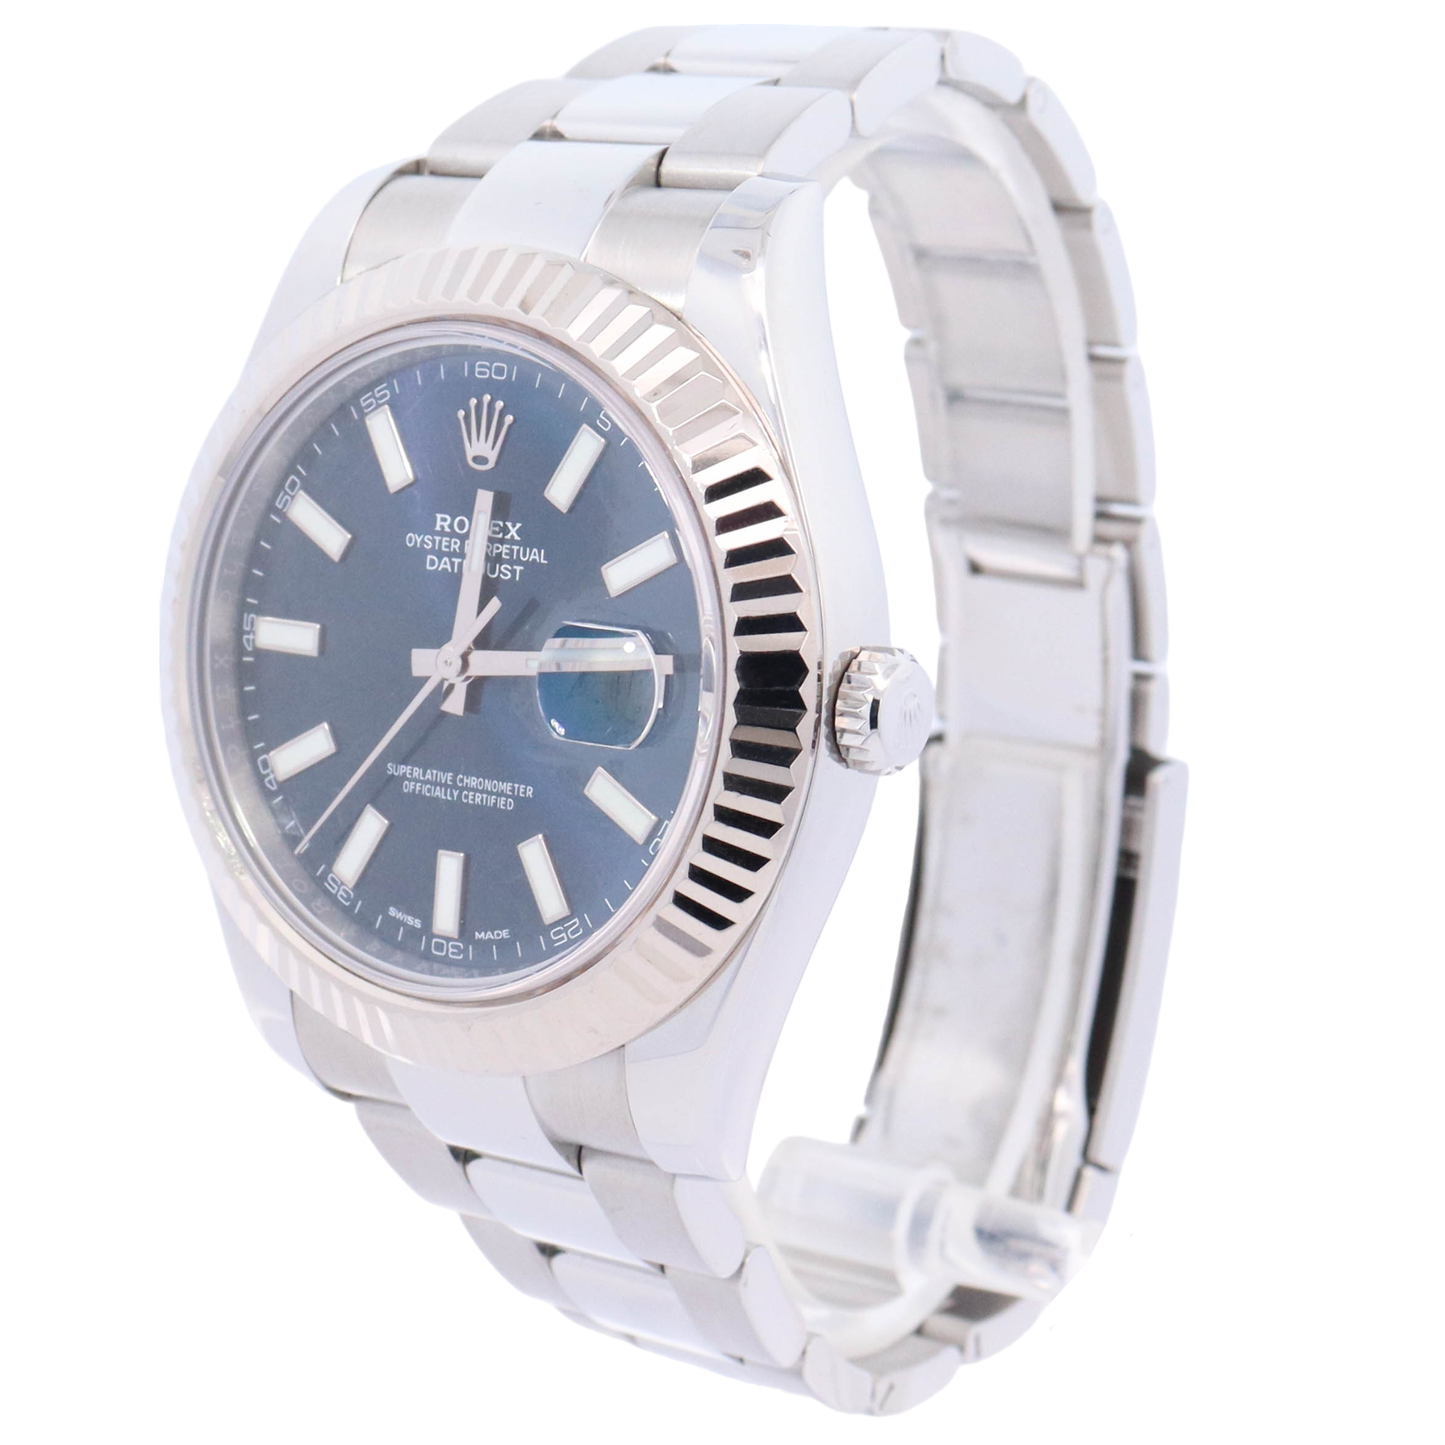 Rolex Datejust 41mm Stainless Steel Blue Stick Dial Watch Reference# 116334 - Happy Jewelers Fine Jewelry Lifetime Warranty